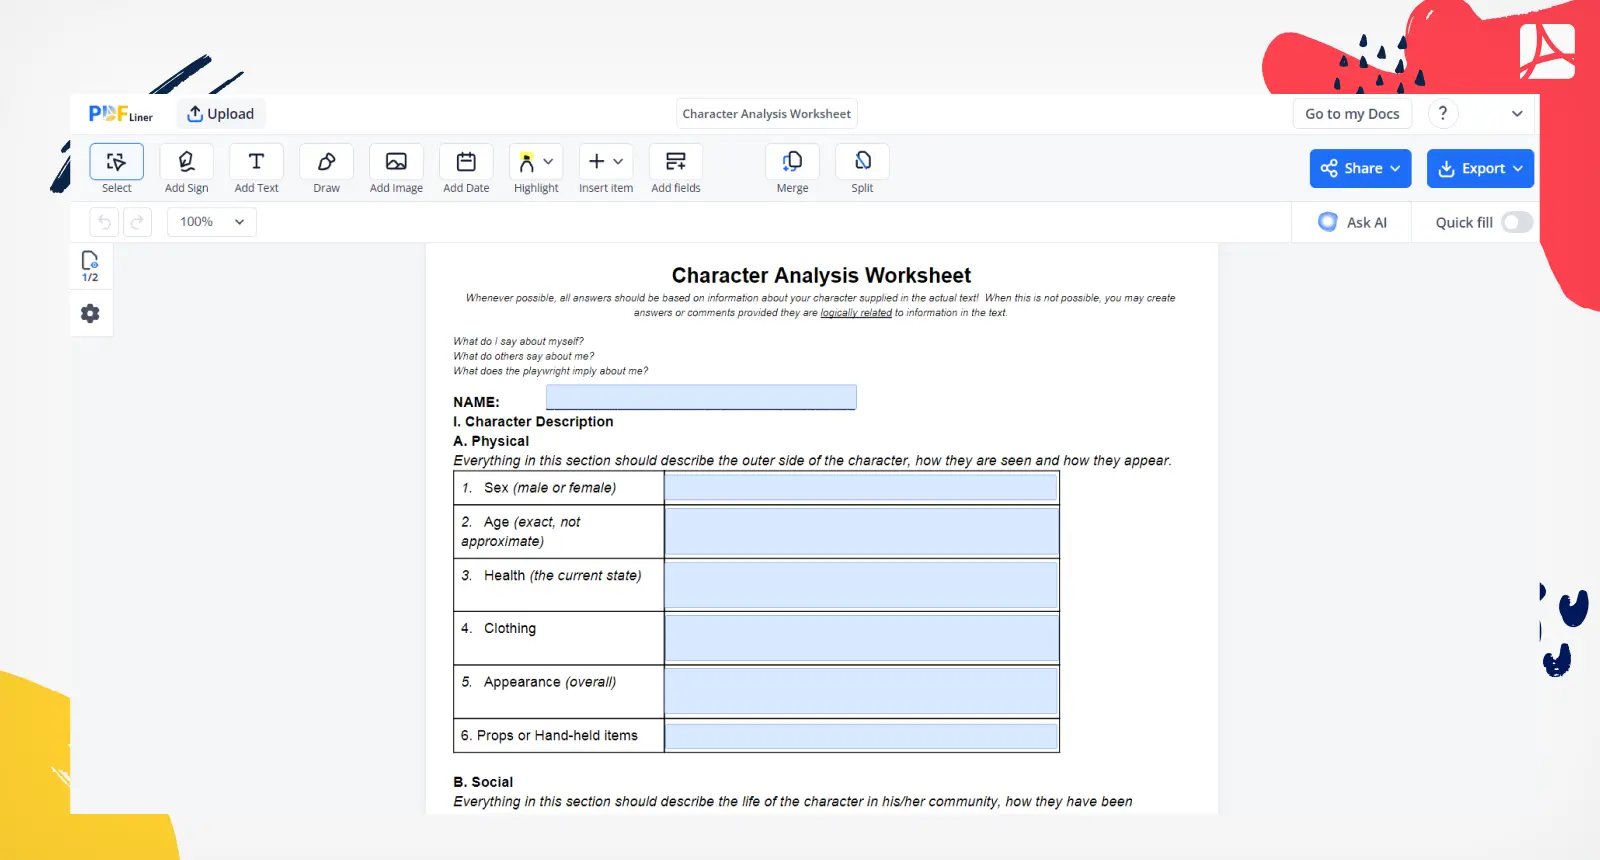 Character Analysis Worksheet Screenshot